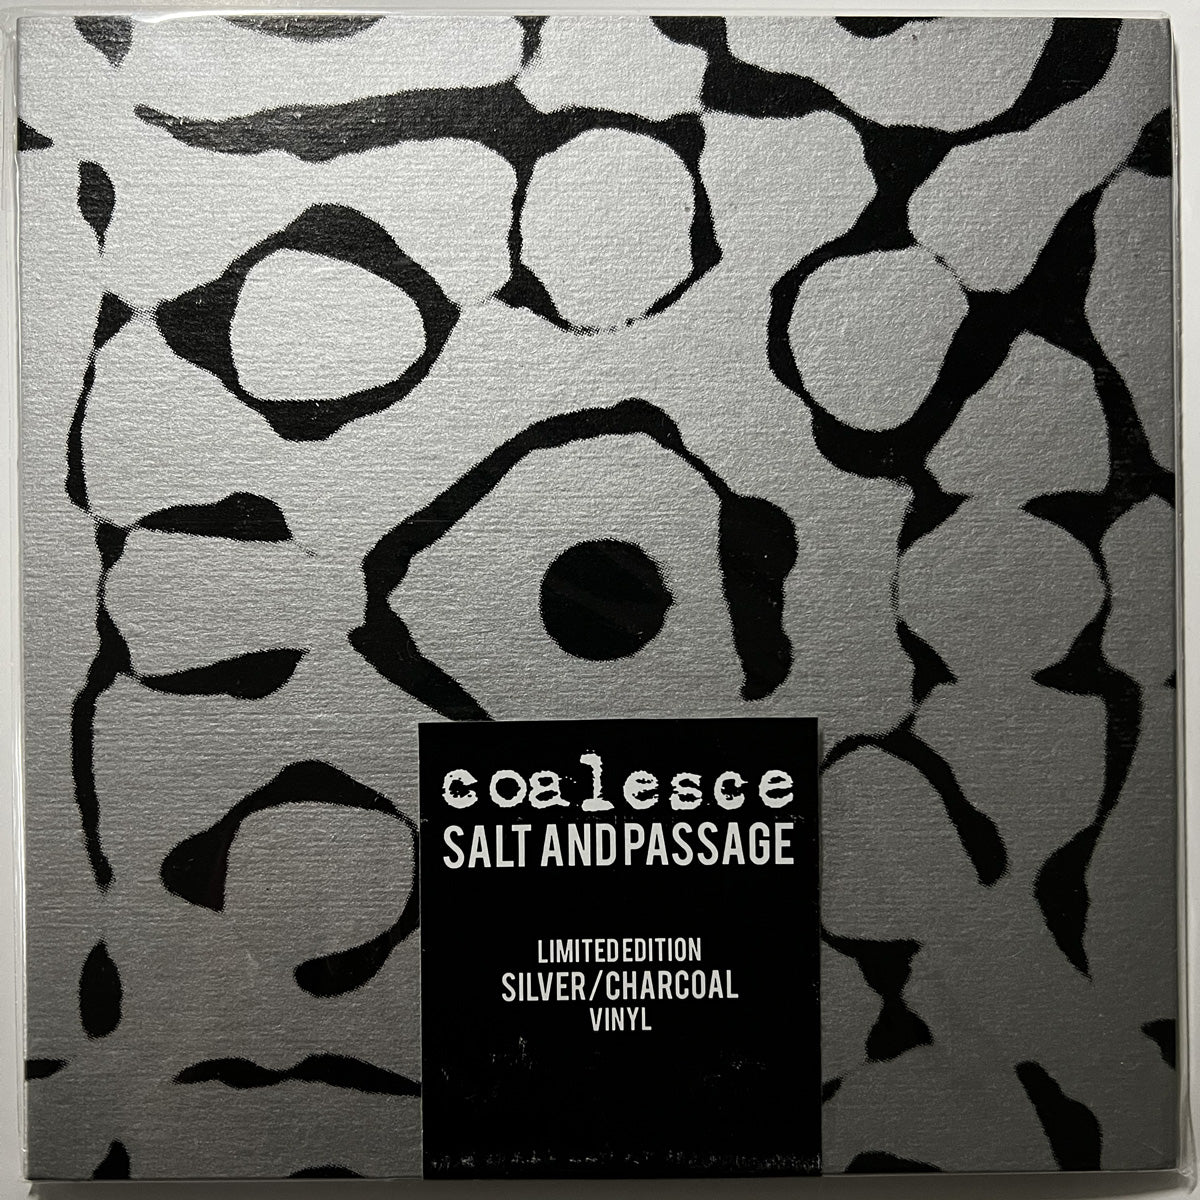 Coalesce: Salt and Passage: 7" Silver/Charcoal Vinyl